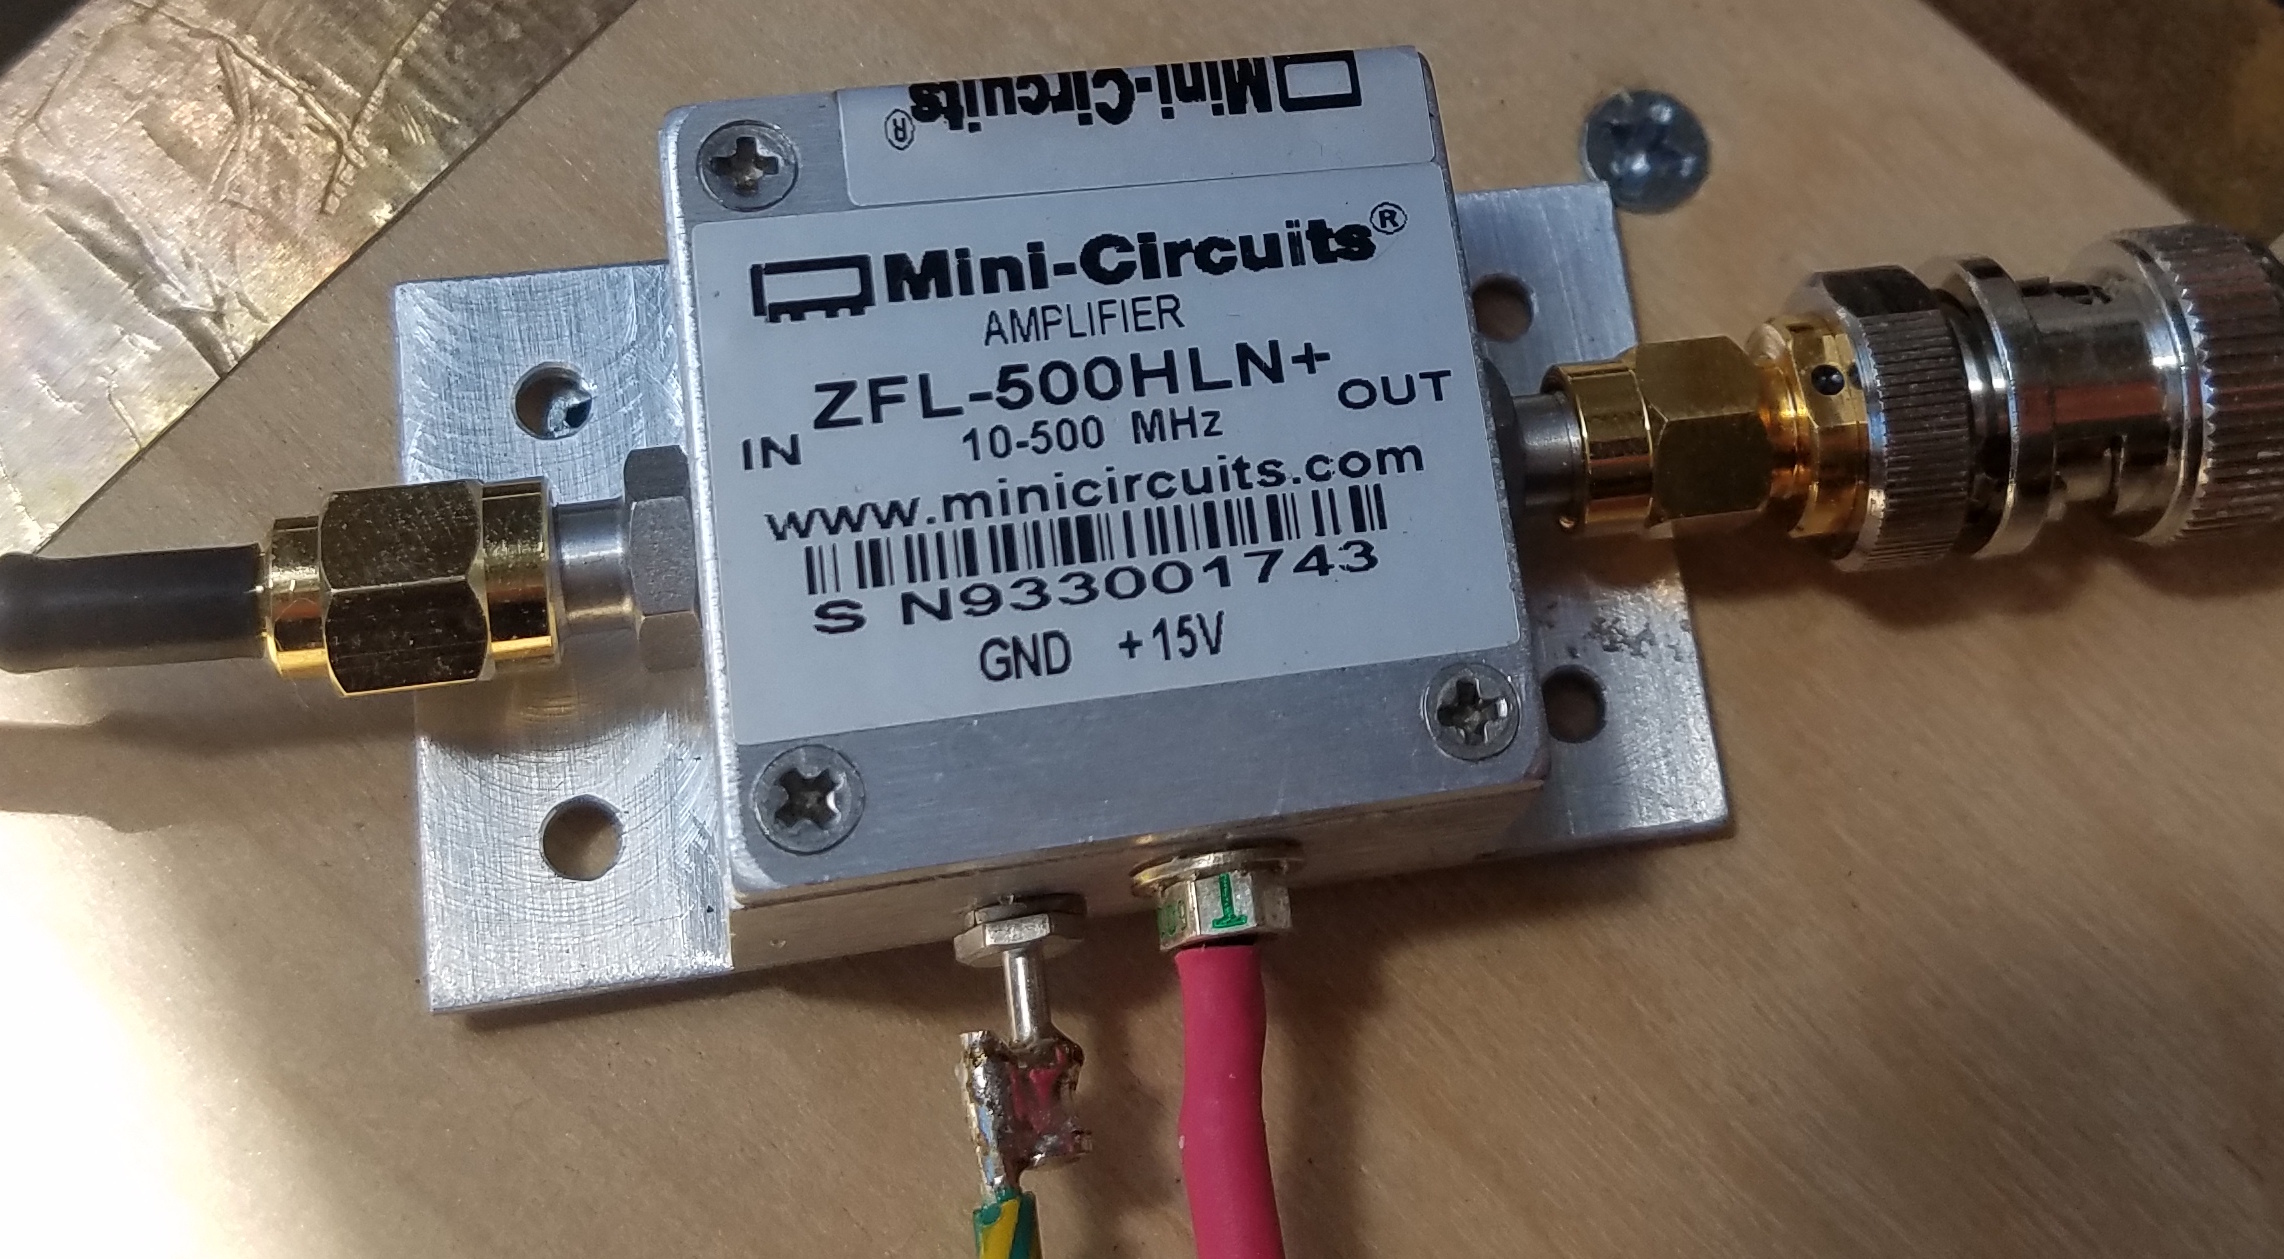 Minicircuits Amplifier